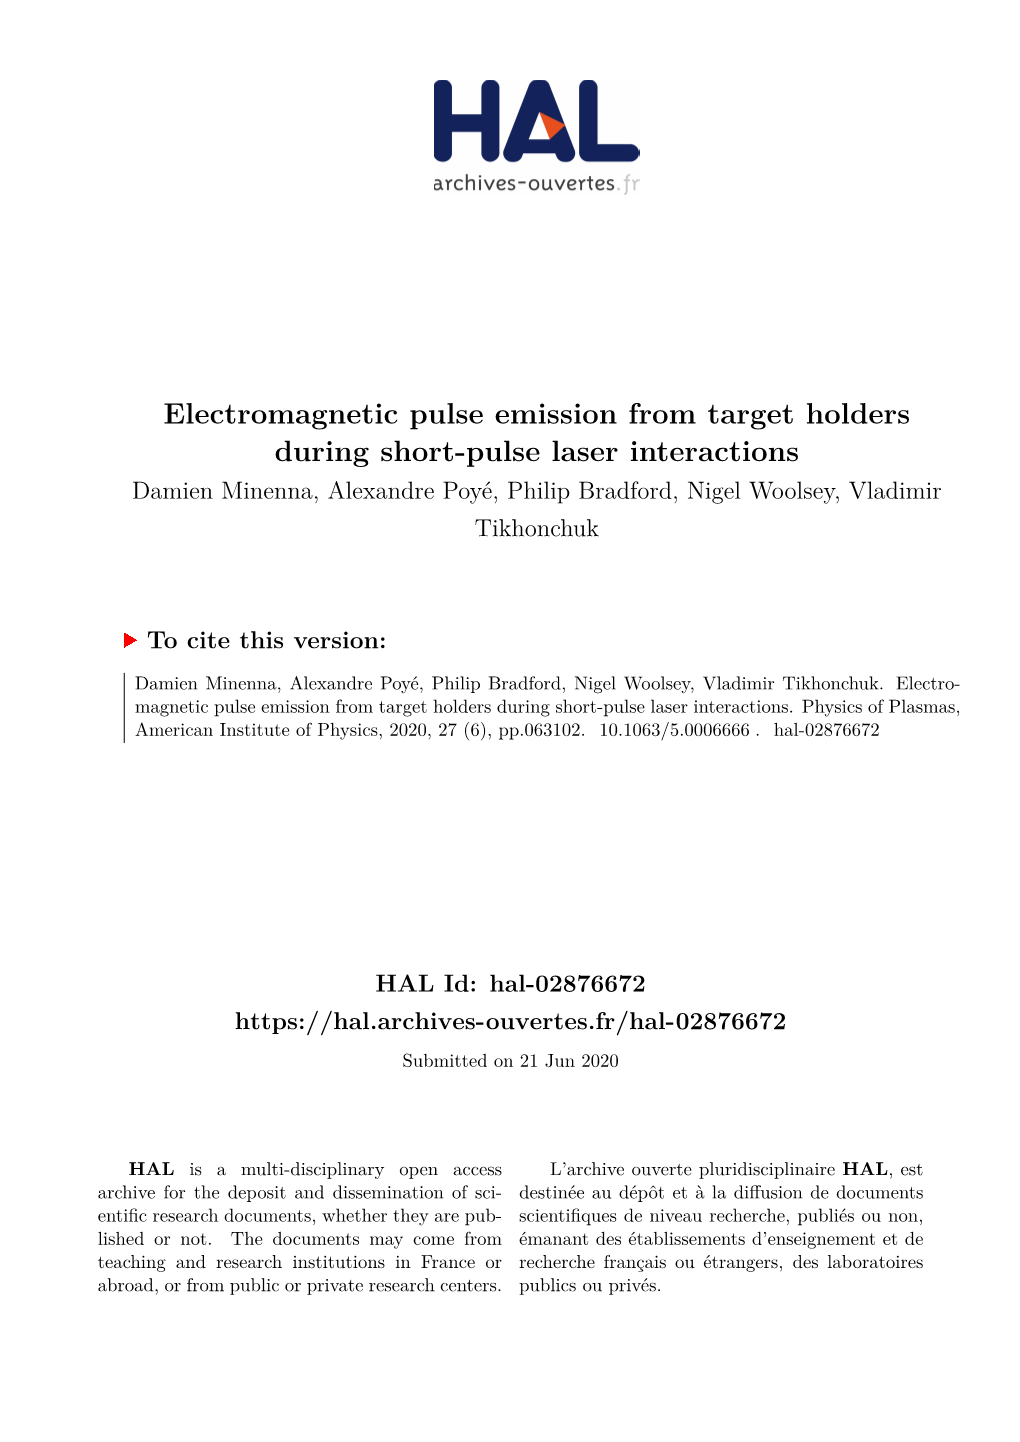 Electromagnetic Pulse Emission from Target Holders During Short-Pulse